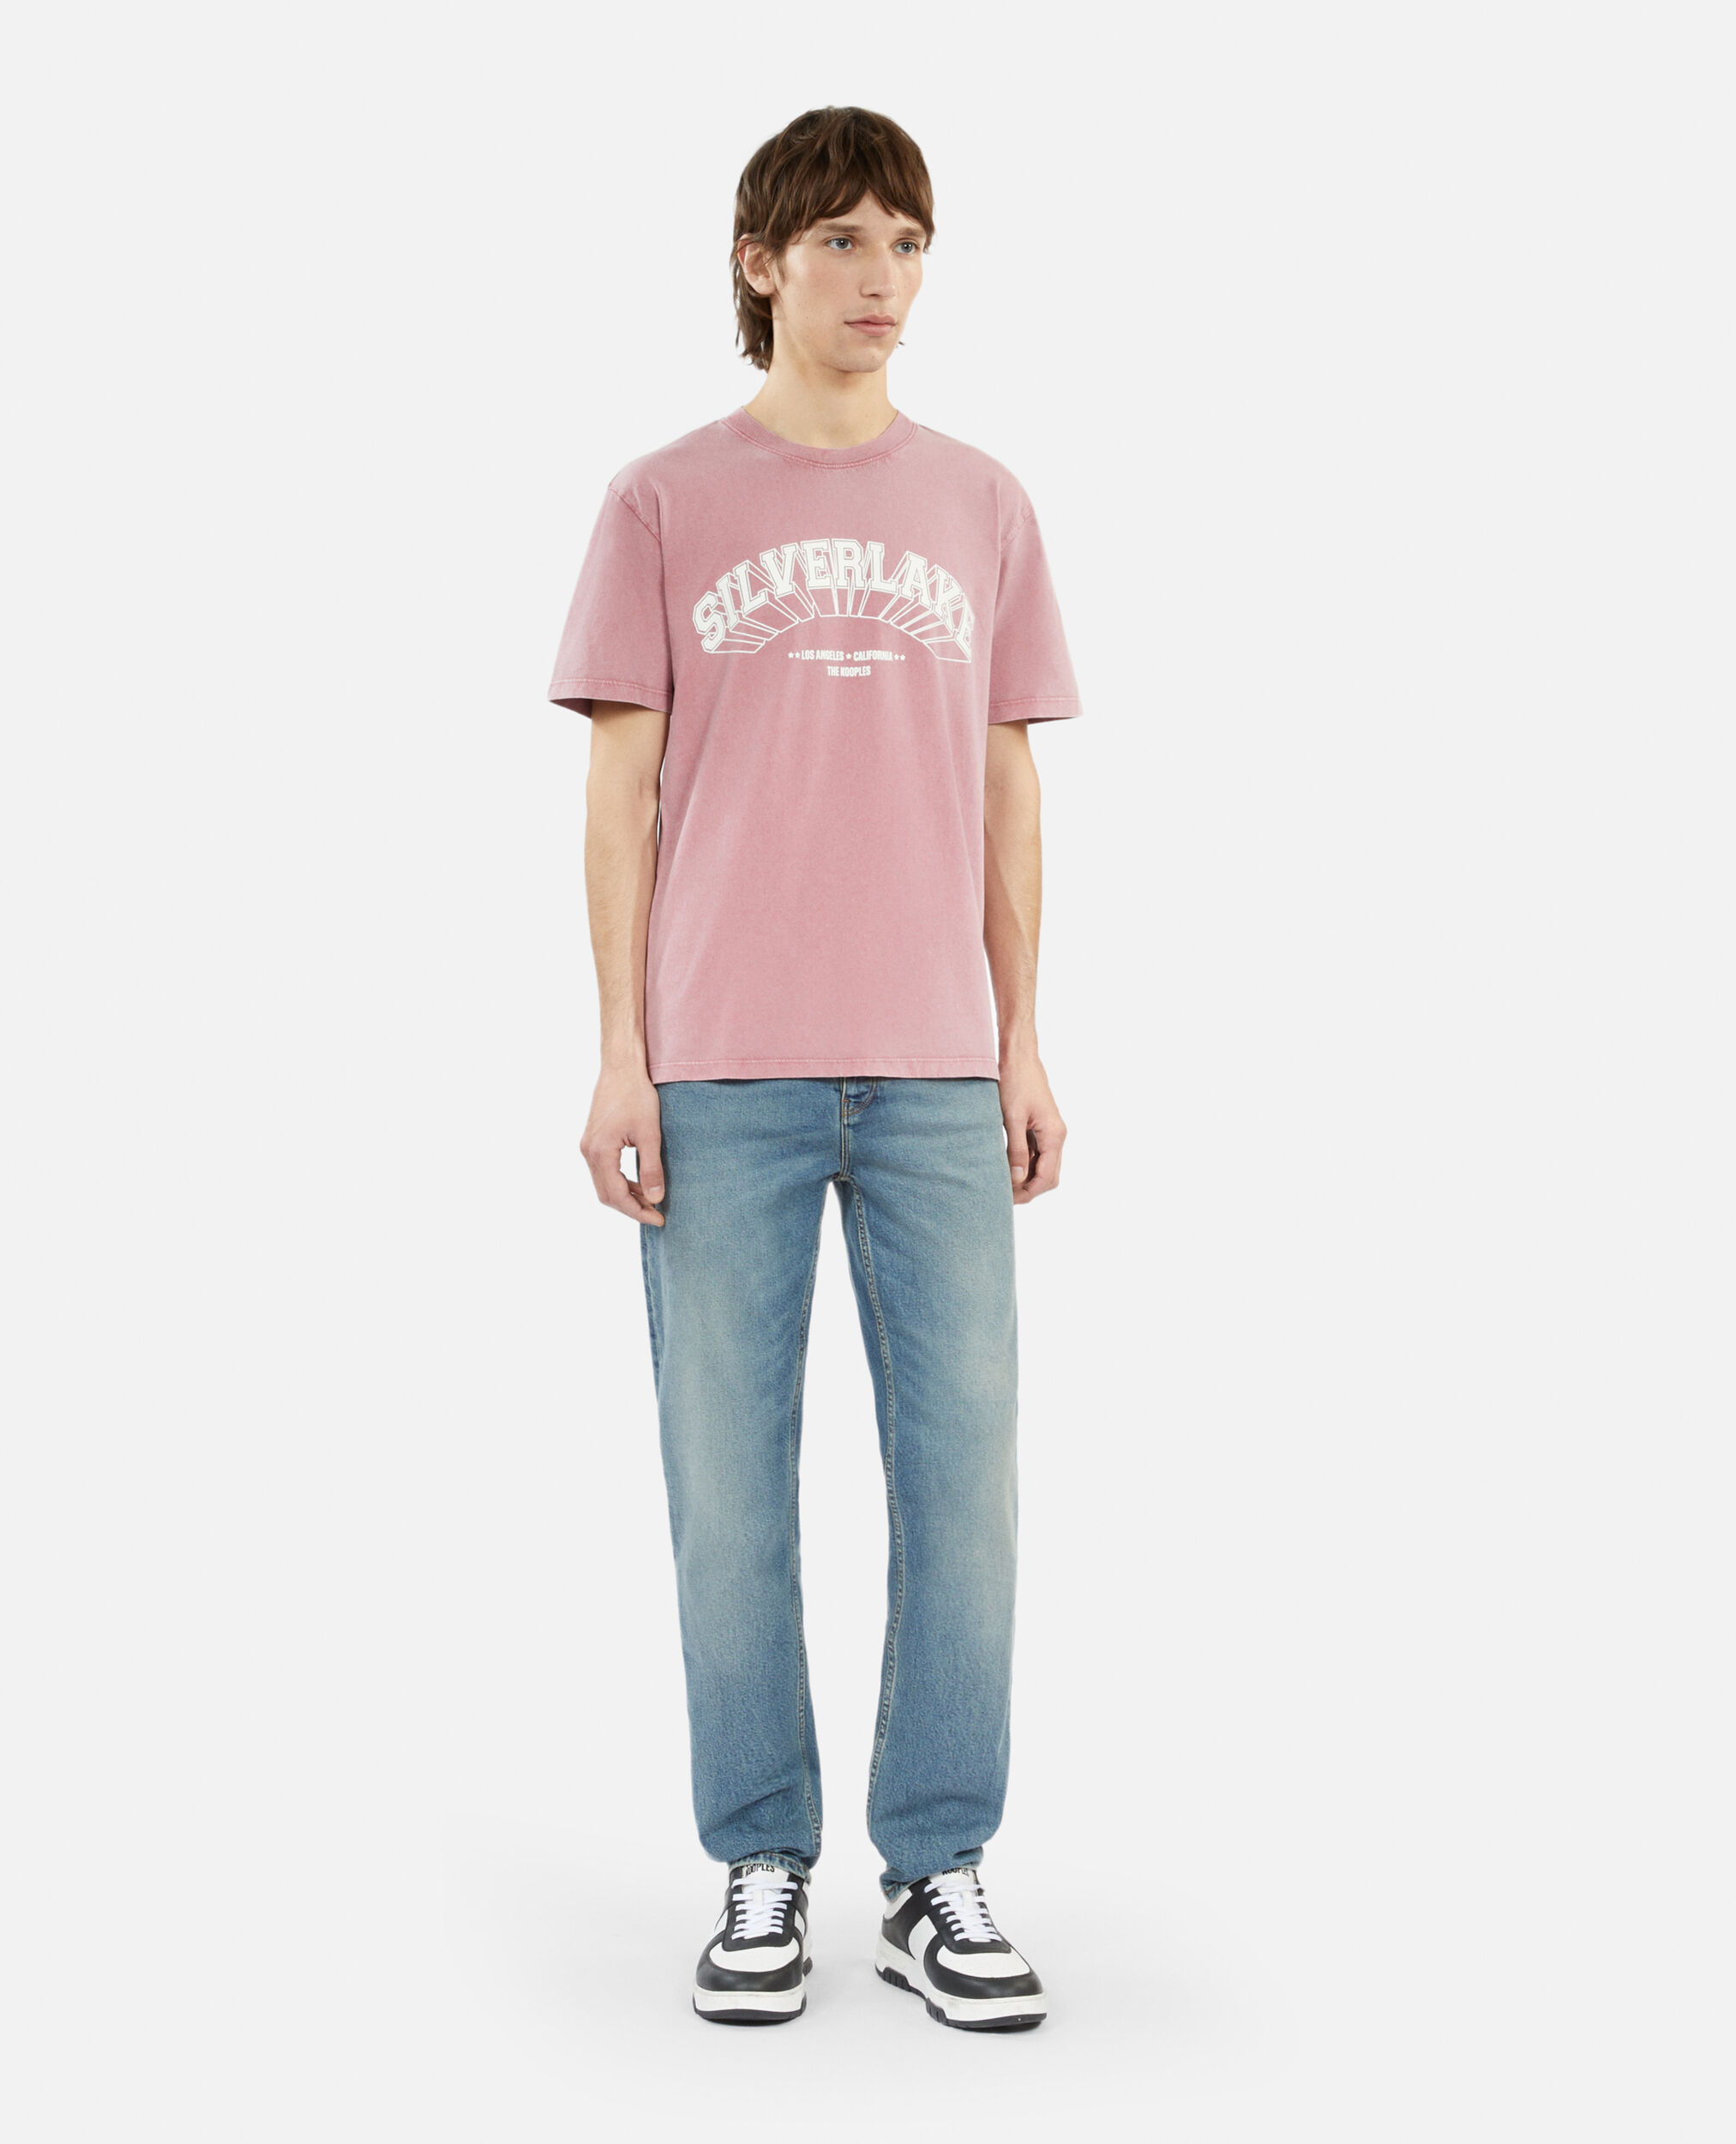 T-shirt rose clair avec sérigraphie Silverlake, PINK WOOD, hi-res image number null